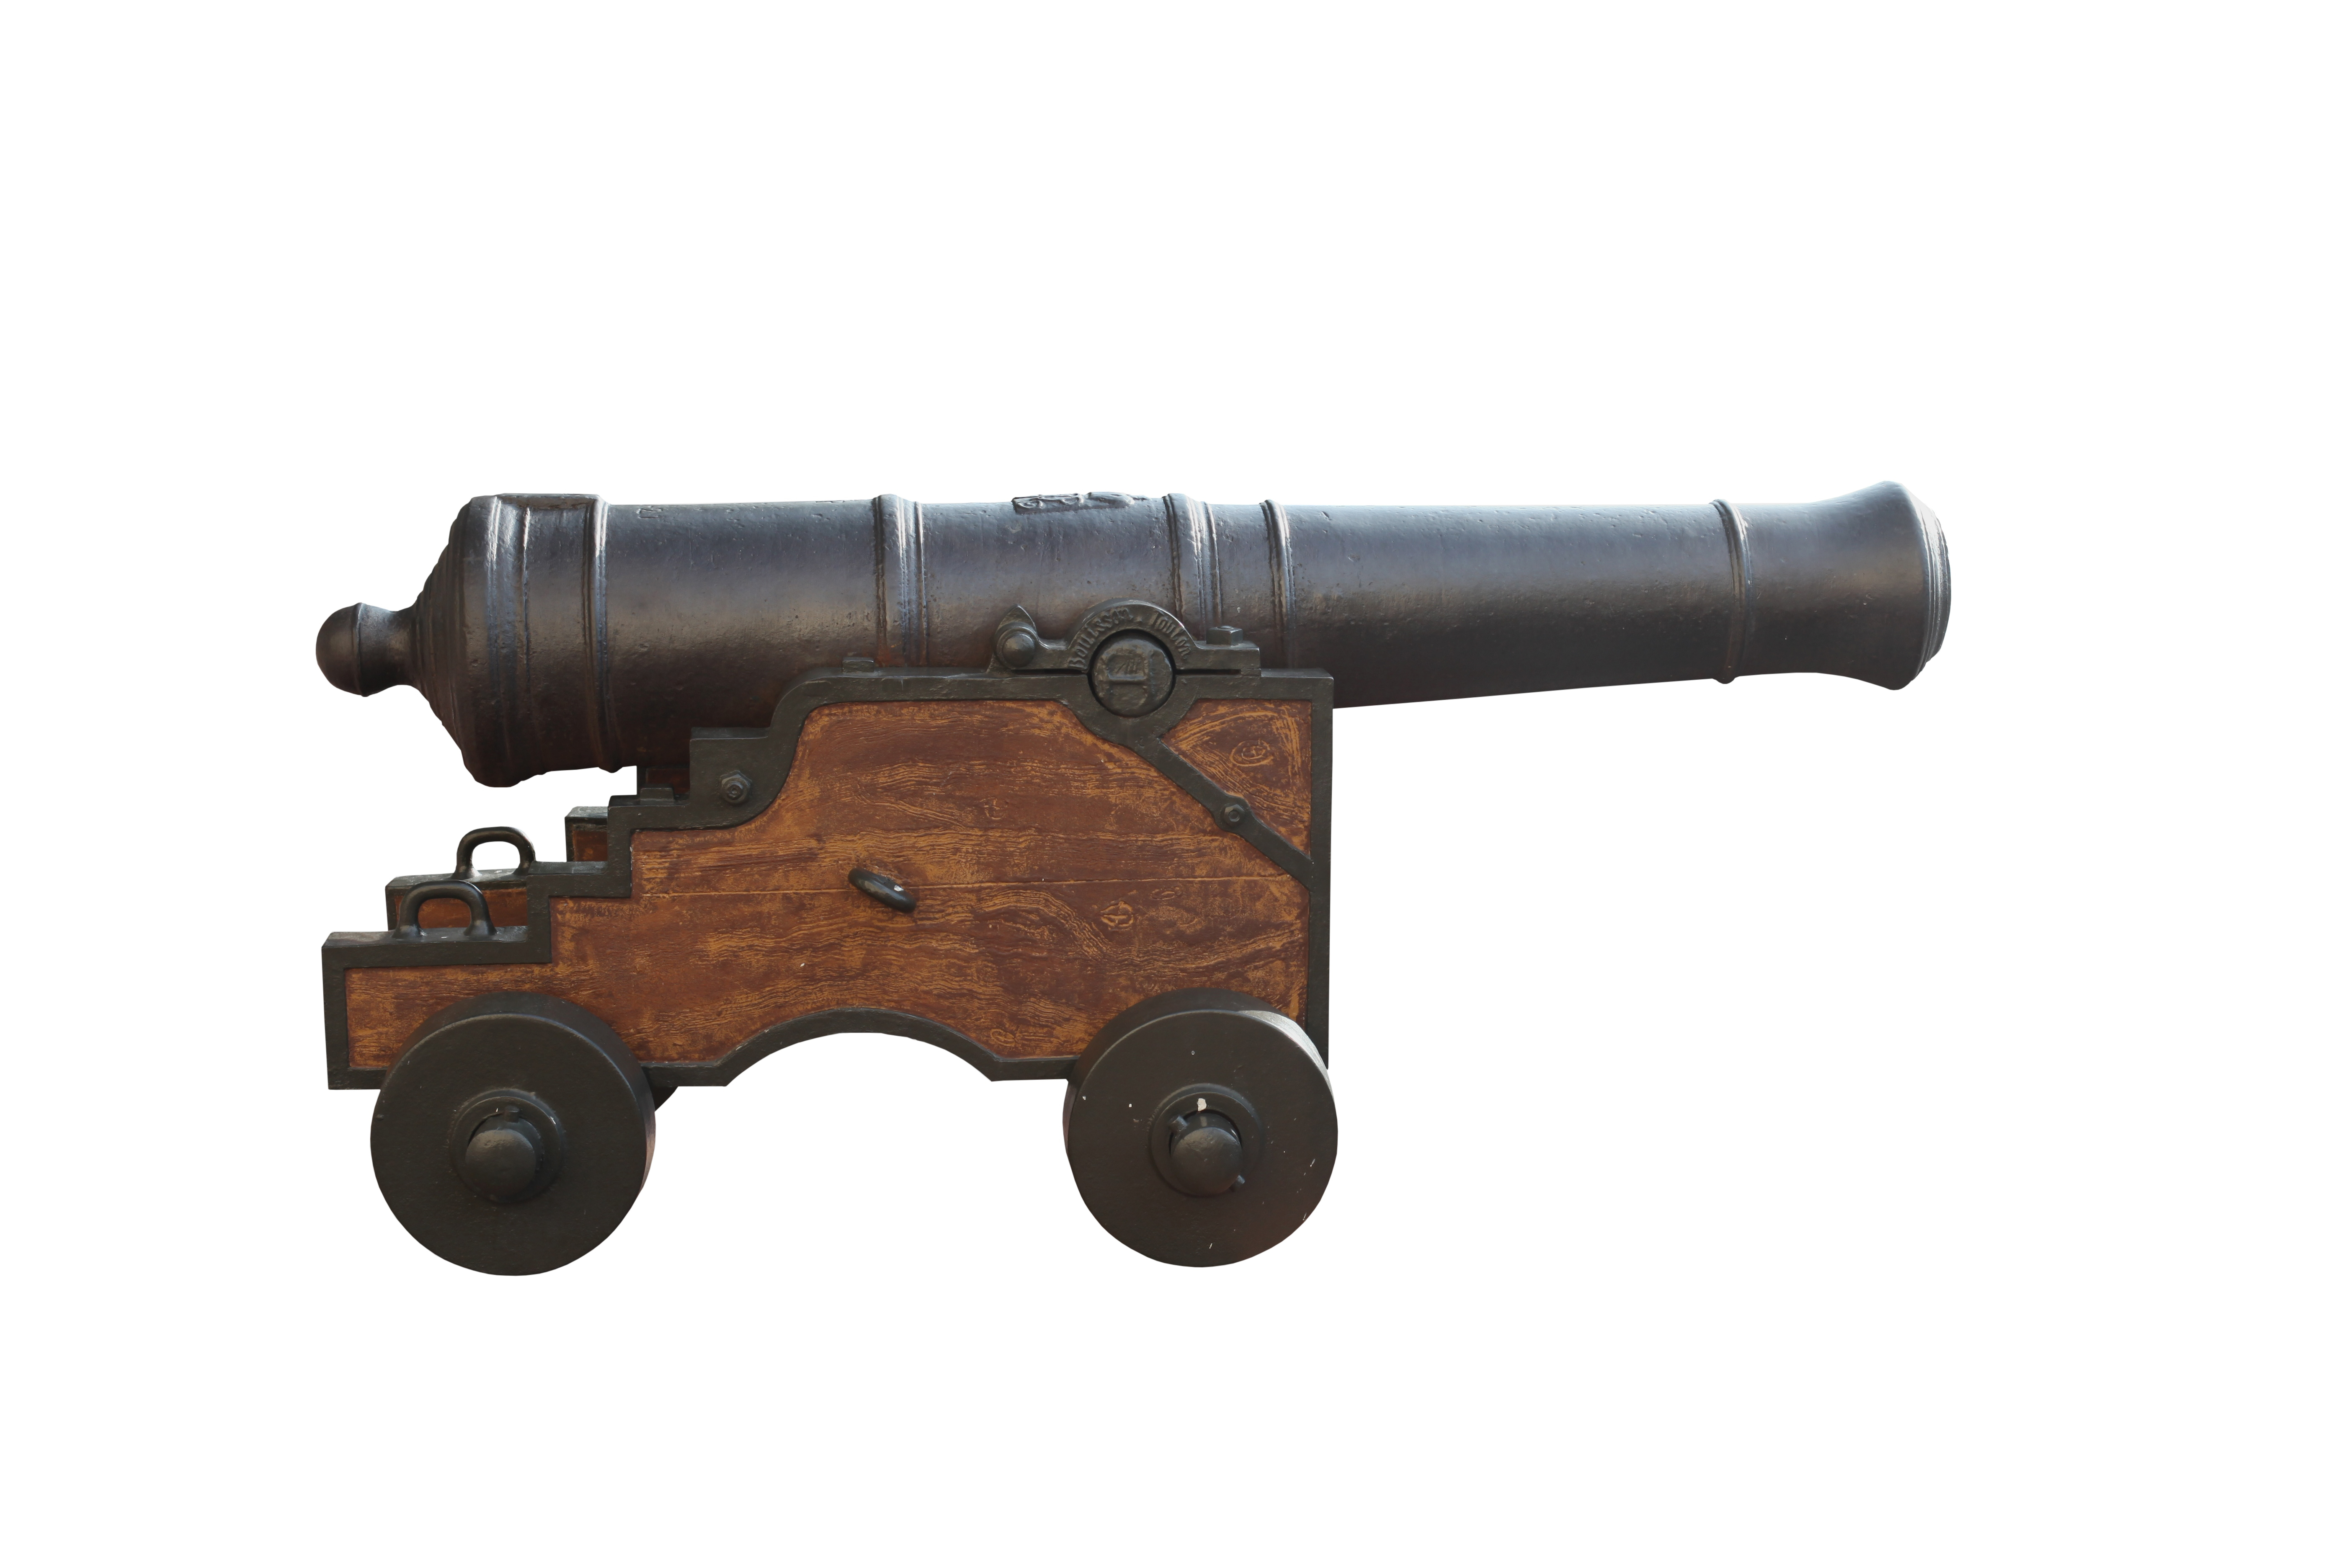 File:Cannon-IMG 1780.jpg - Wikimedia Commons